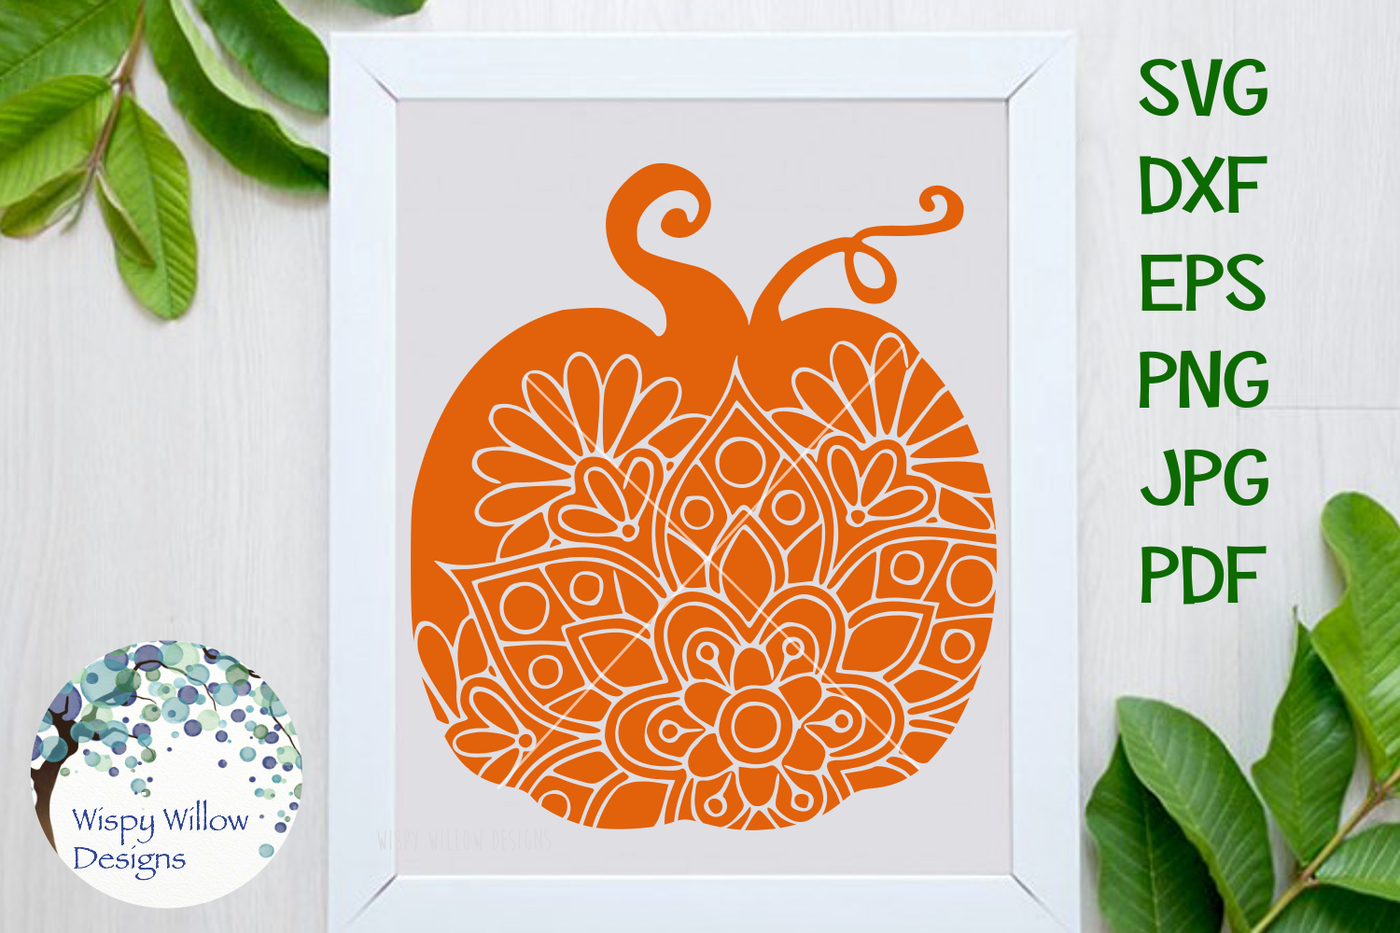 Download Pumpkin Mandala Fall Zentangle Svg Dxf Eps Png Jpg Pdf By Wispy Willow Designs Thehungryjpeg Com